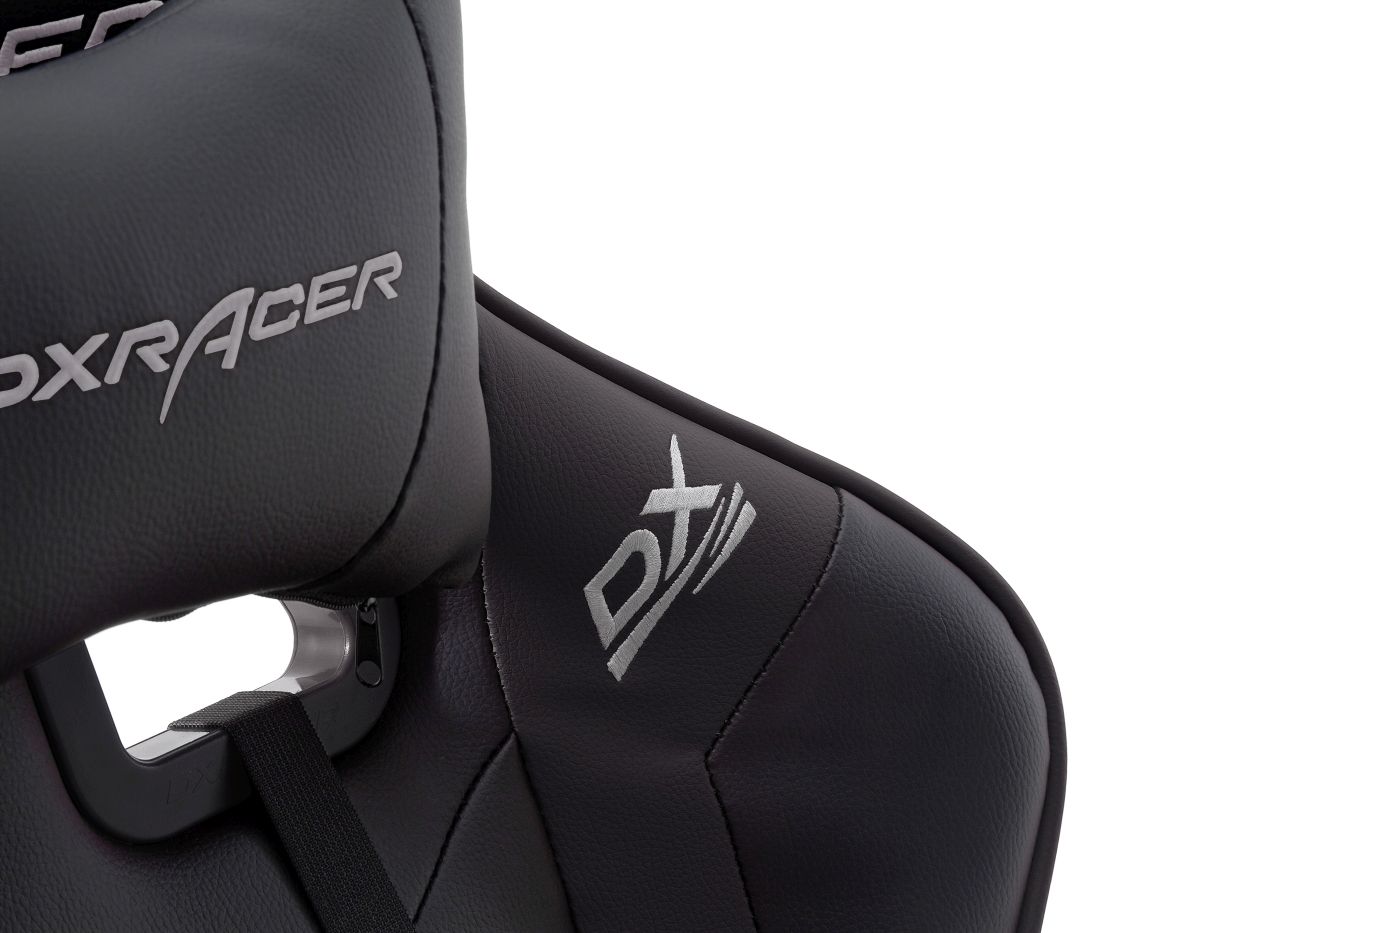 Gamingsessel DX-Racer Sport in schwarz